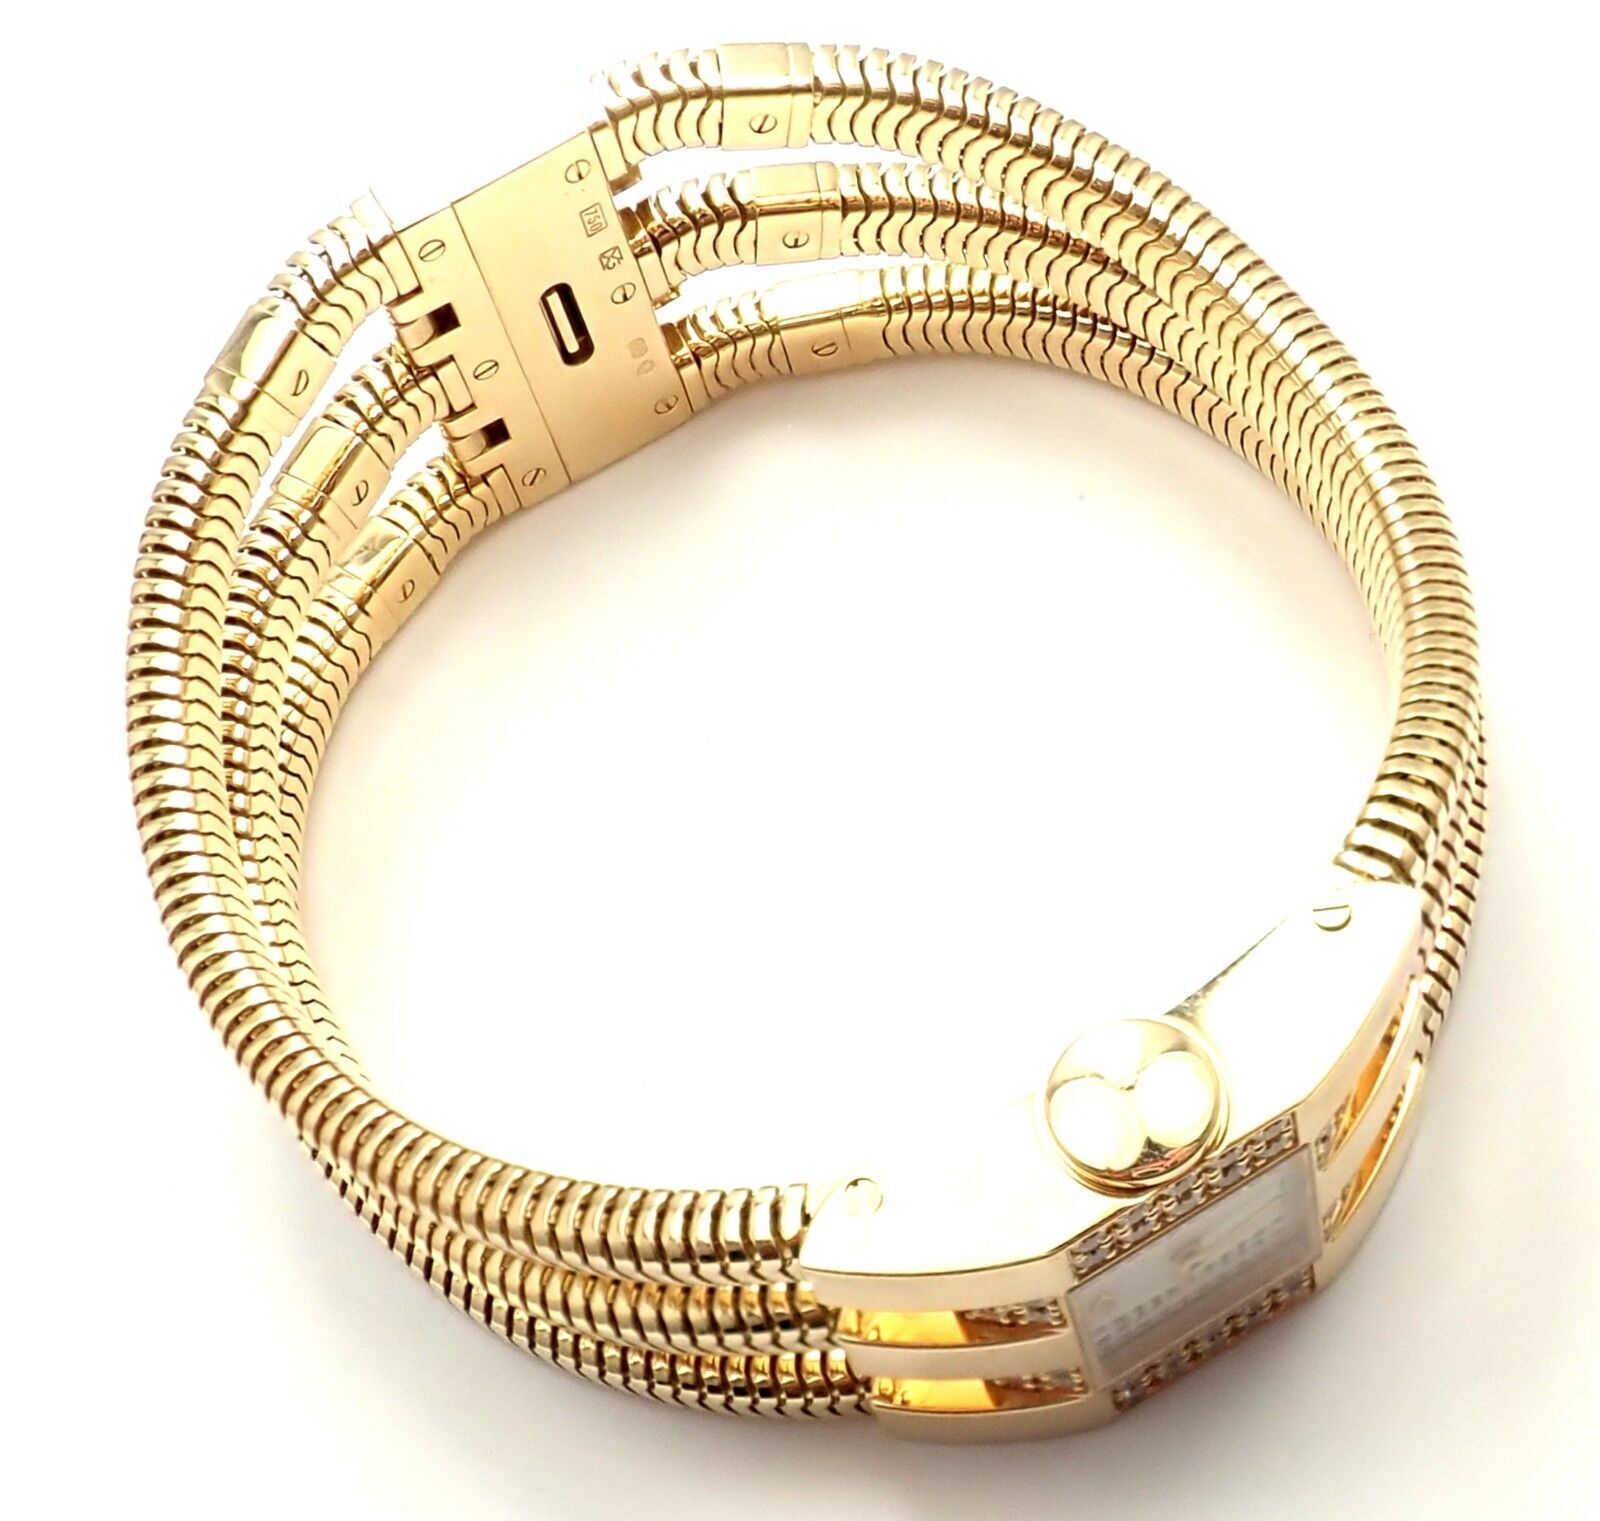 Van Cleef & Arpels Jewelry & Watches:Watches, Parts & Accessories:Watches:Wristwatches Authentic! Van Cleef & Arpels 18k Gold Diamond Liane Collection Bracelet Watch